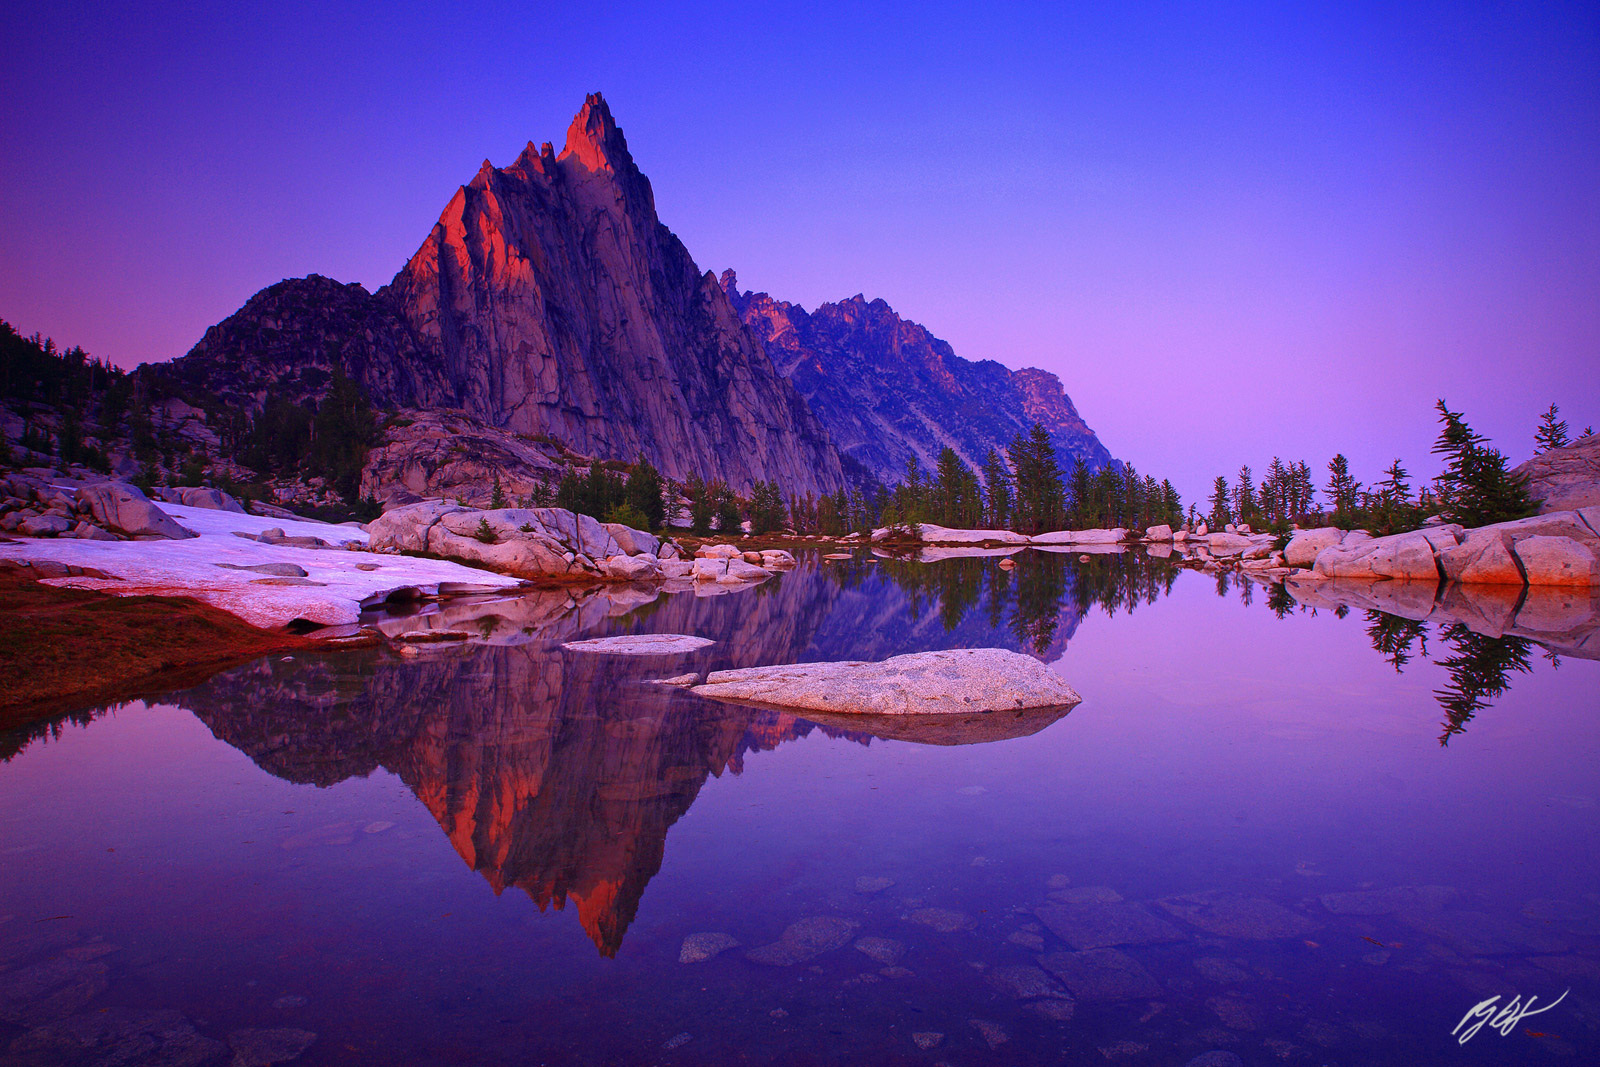 Sunset Prusik Peak and Gnome Tarn in the Enchantments, Alpine Lakes Wilderness, Washington